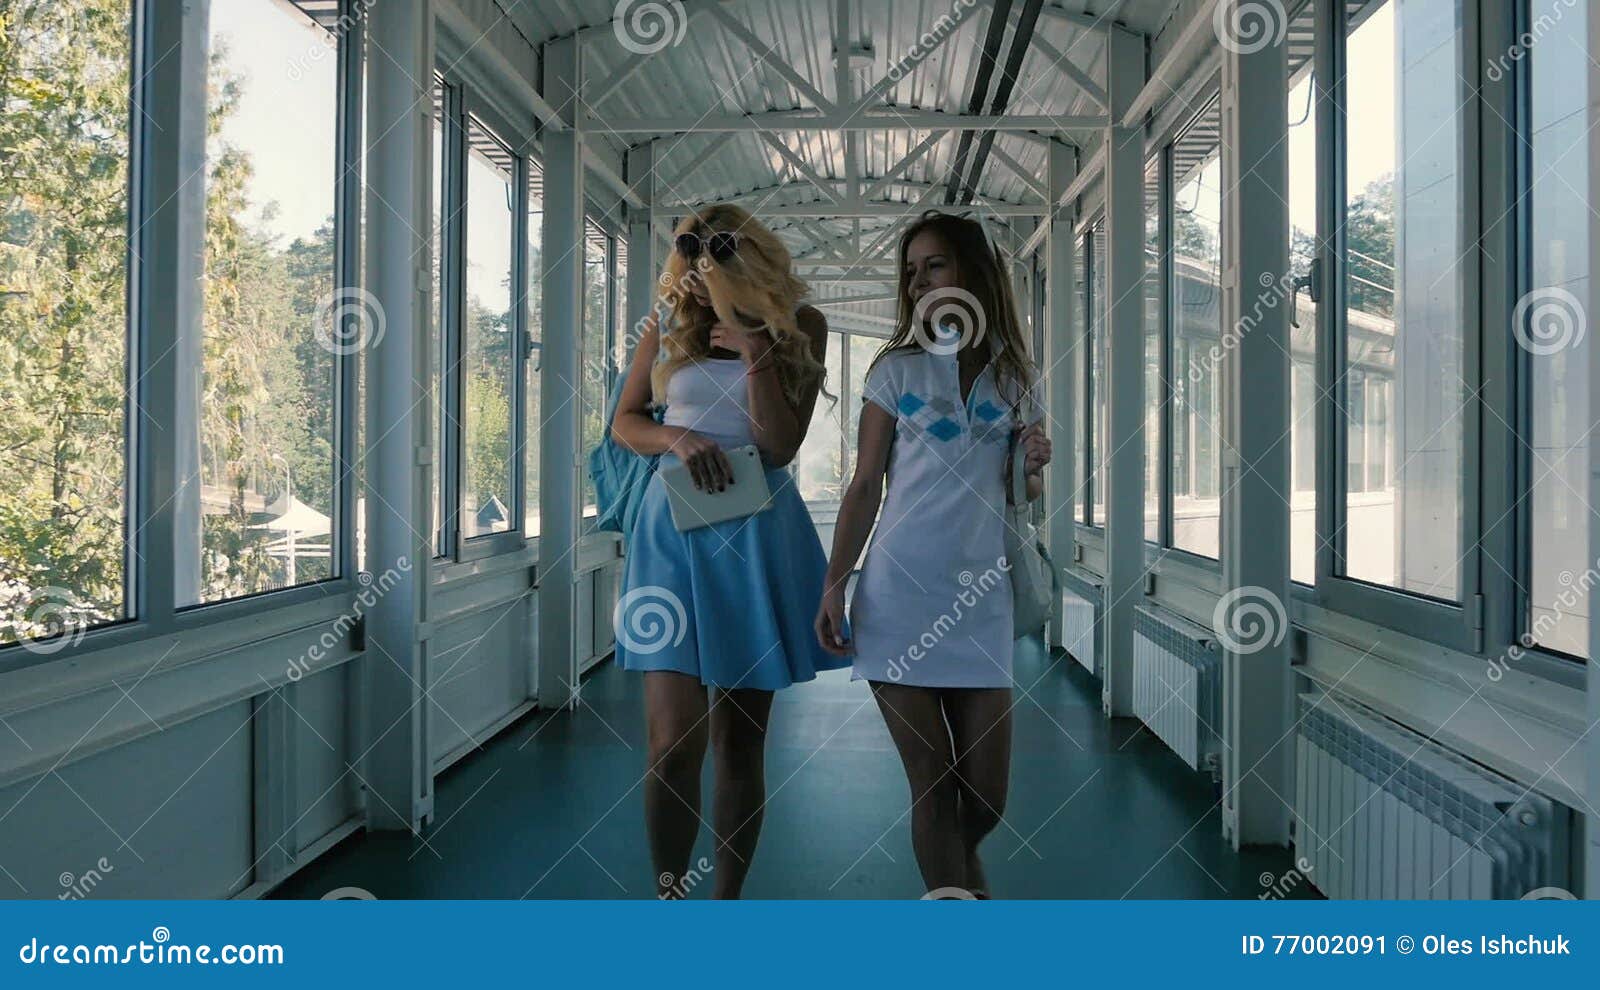 dmitri kulikov recommends three girls one elevator pic